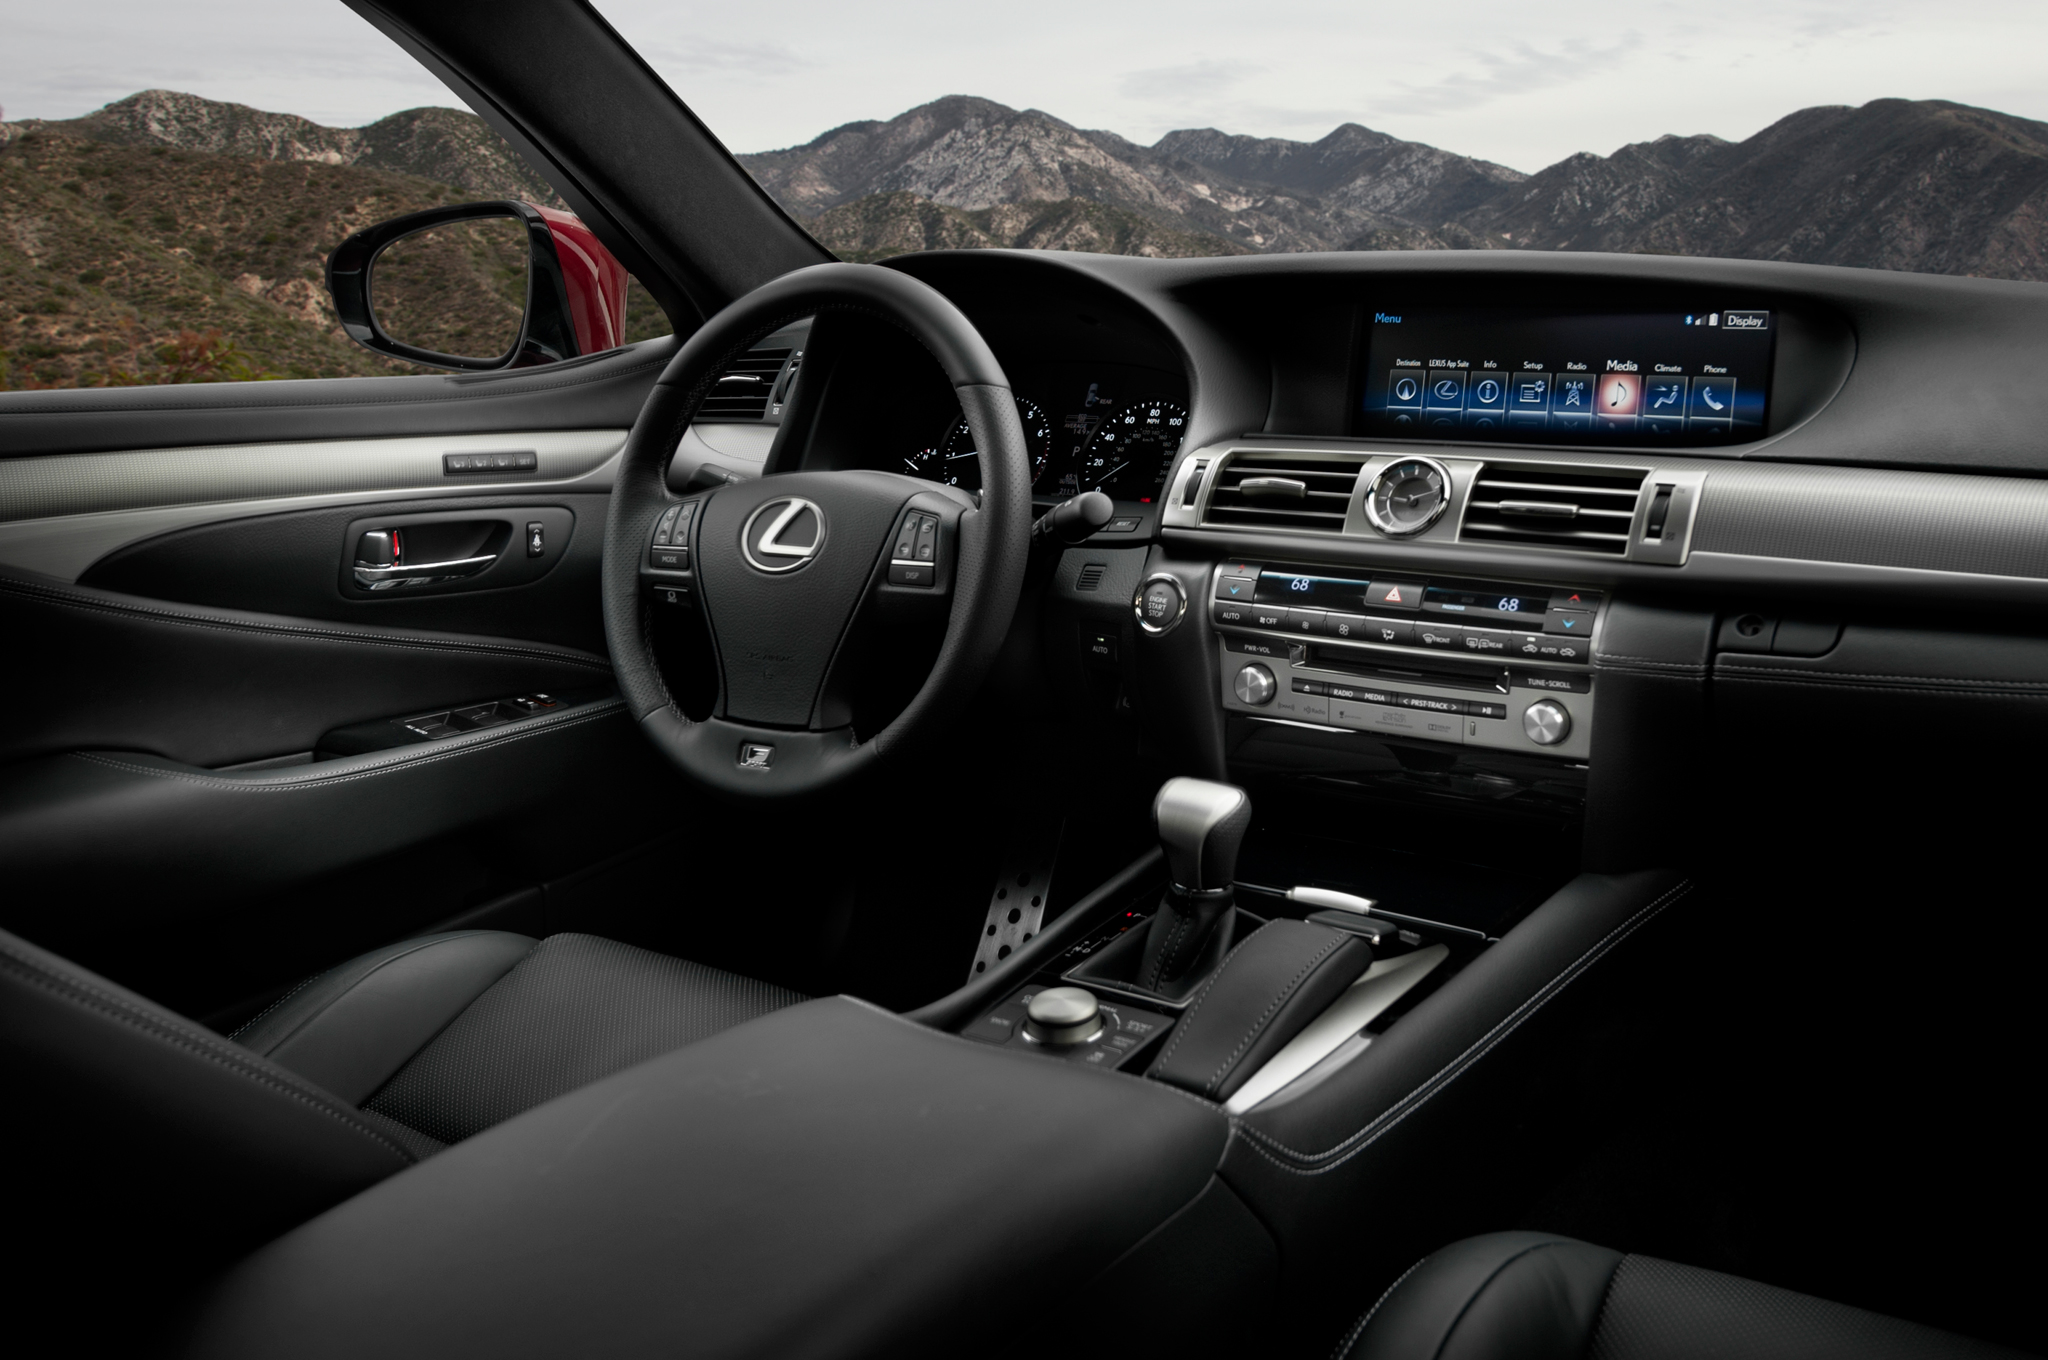 Amazing Lexus LS Pictures & Backgrounds